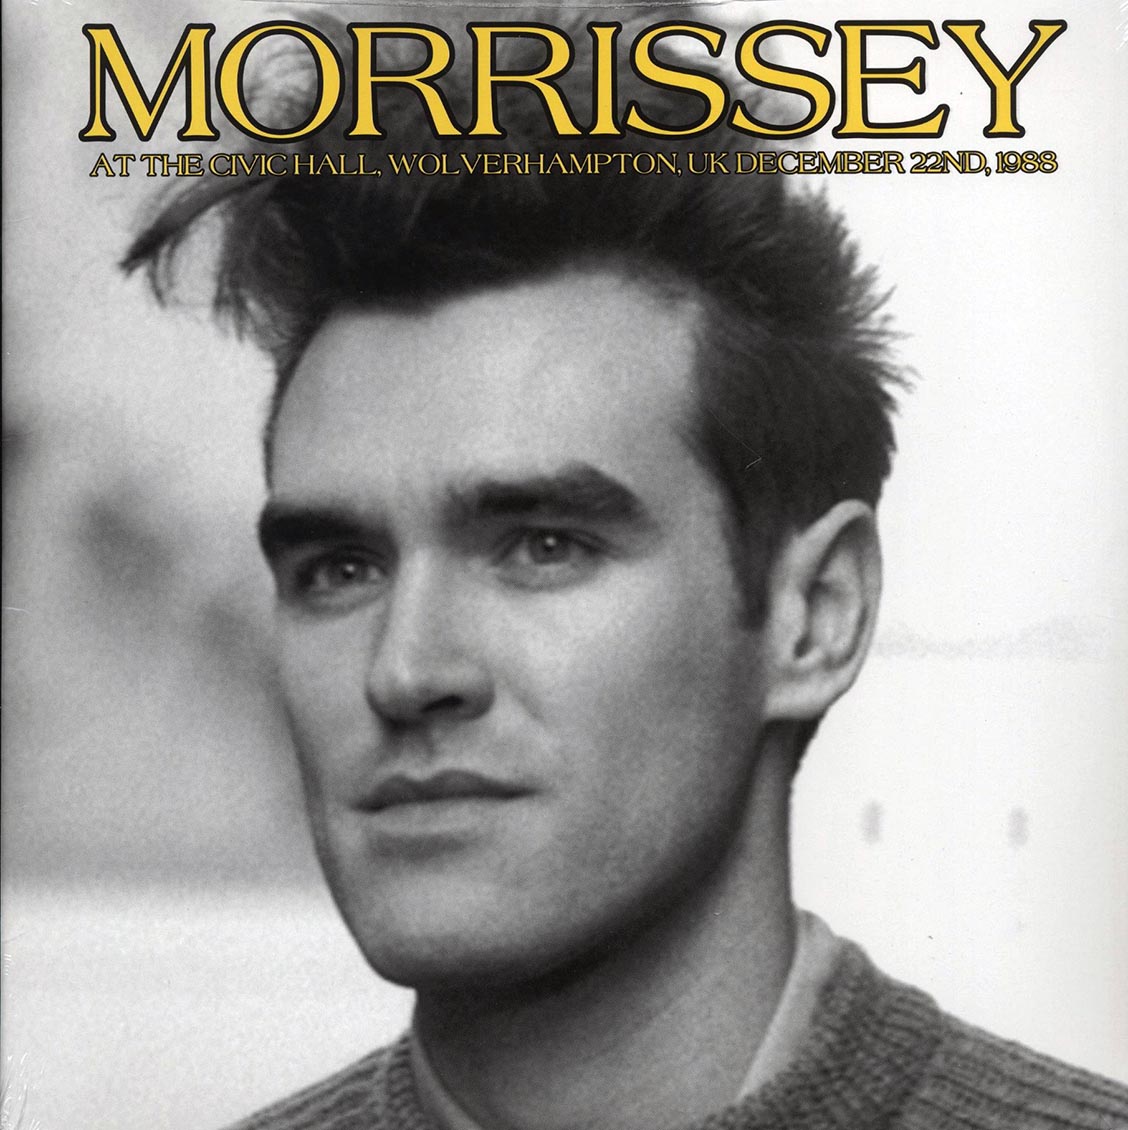 Morrissey - At The Civic Hall, Wolverhampton, UK December 22nd, 1988 (ltd. 500 copies made) - Vinyl LP